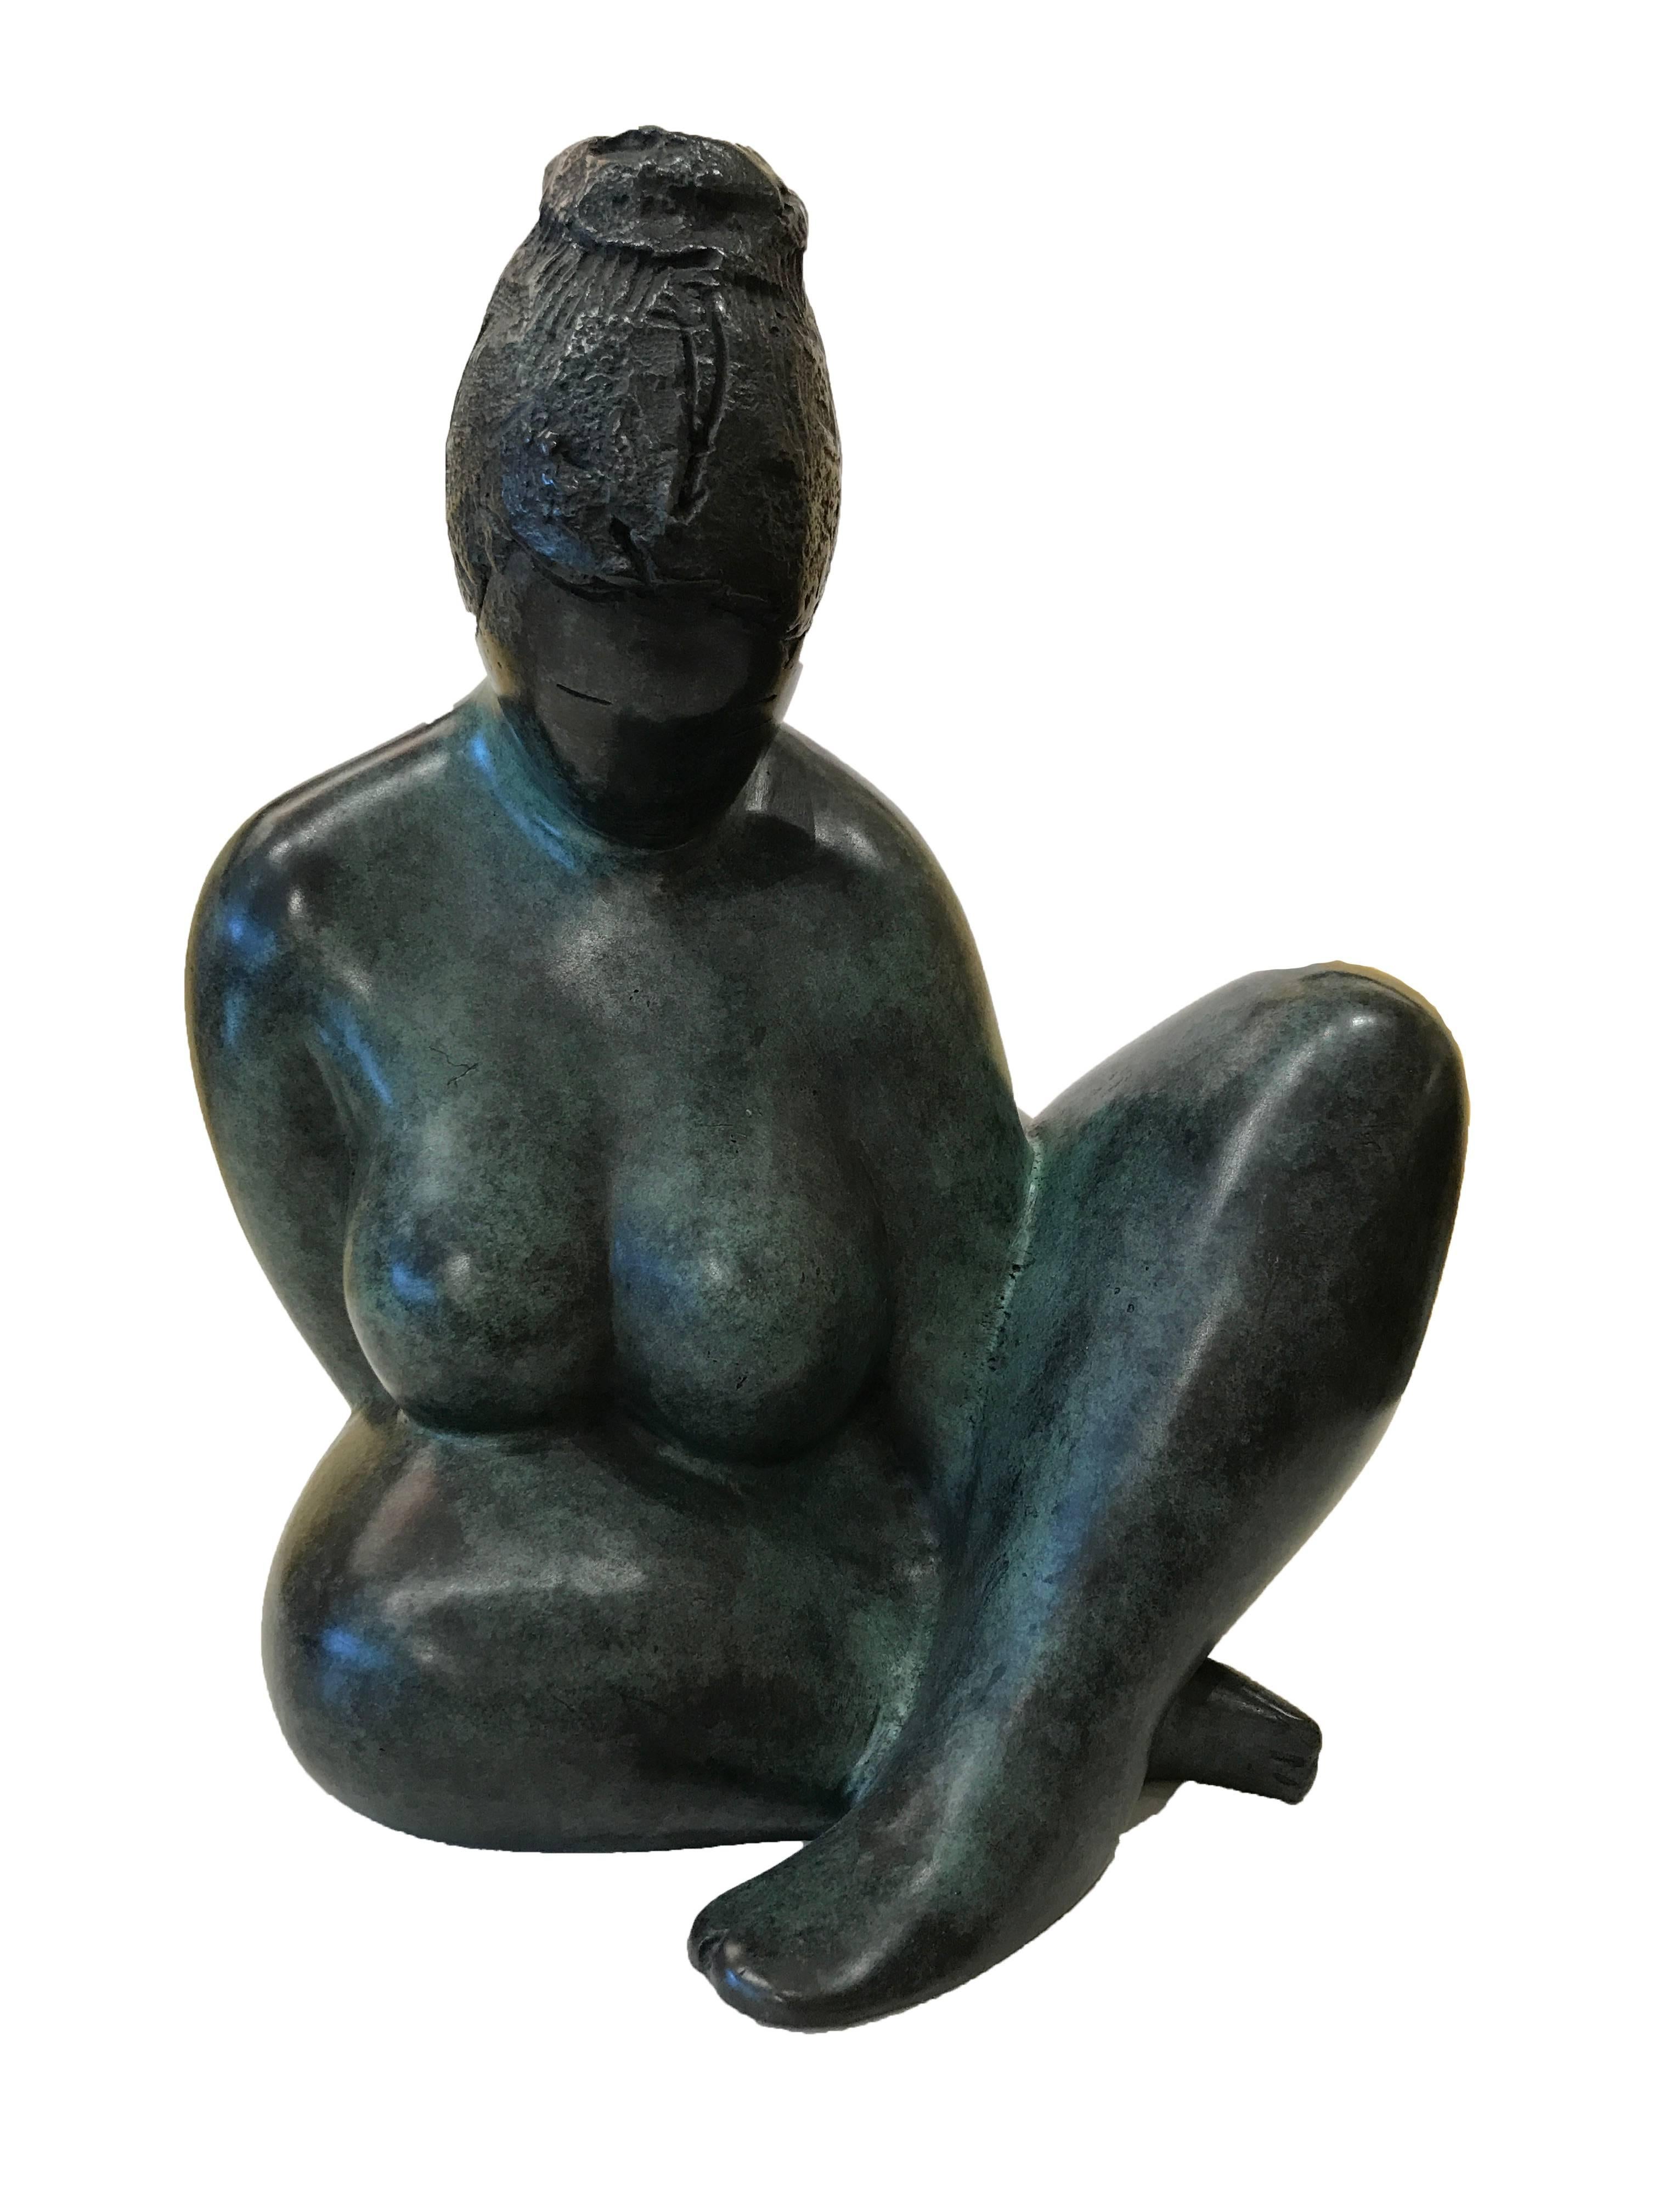 Alain Bonnefoit Nude Sculpture - Pomone 